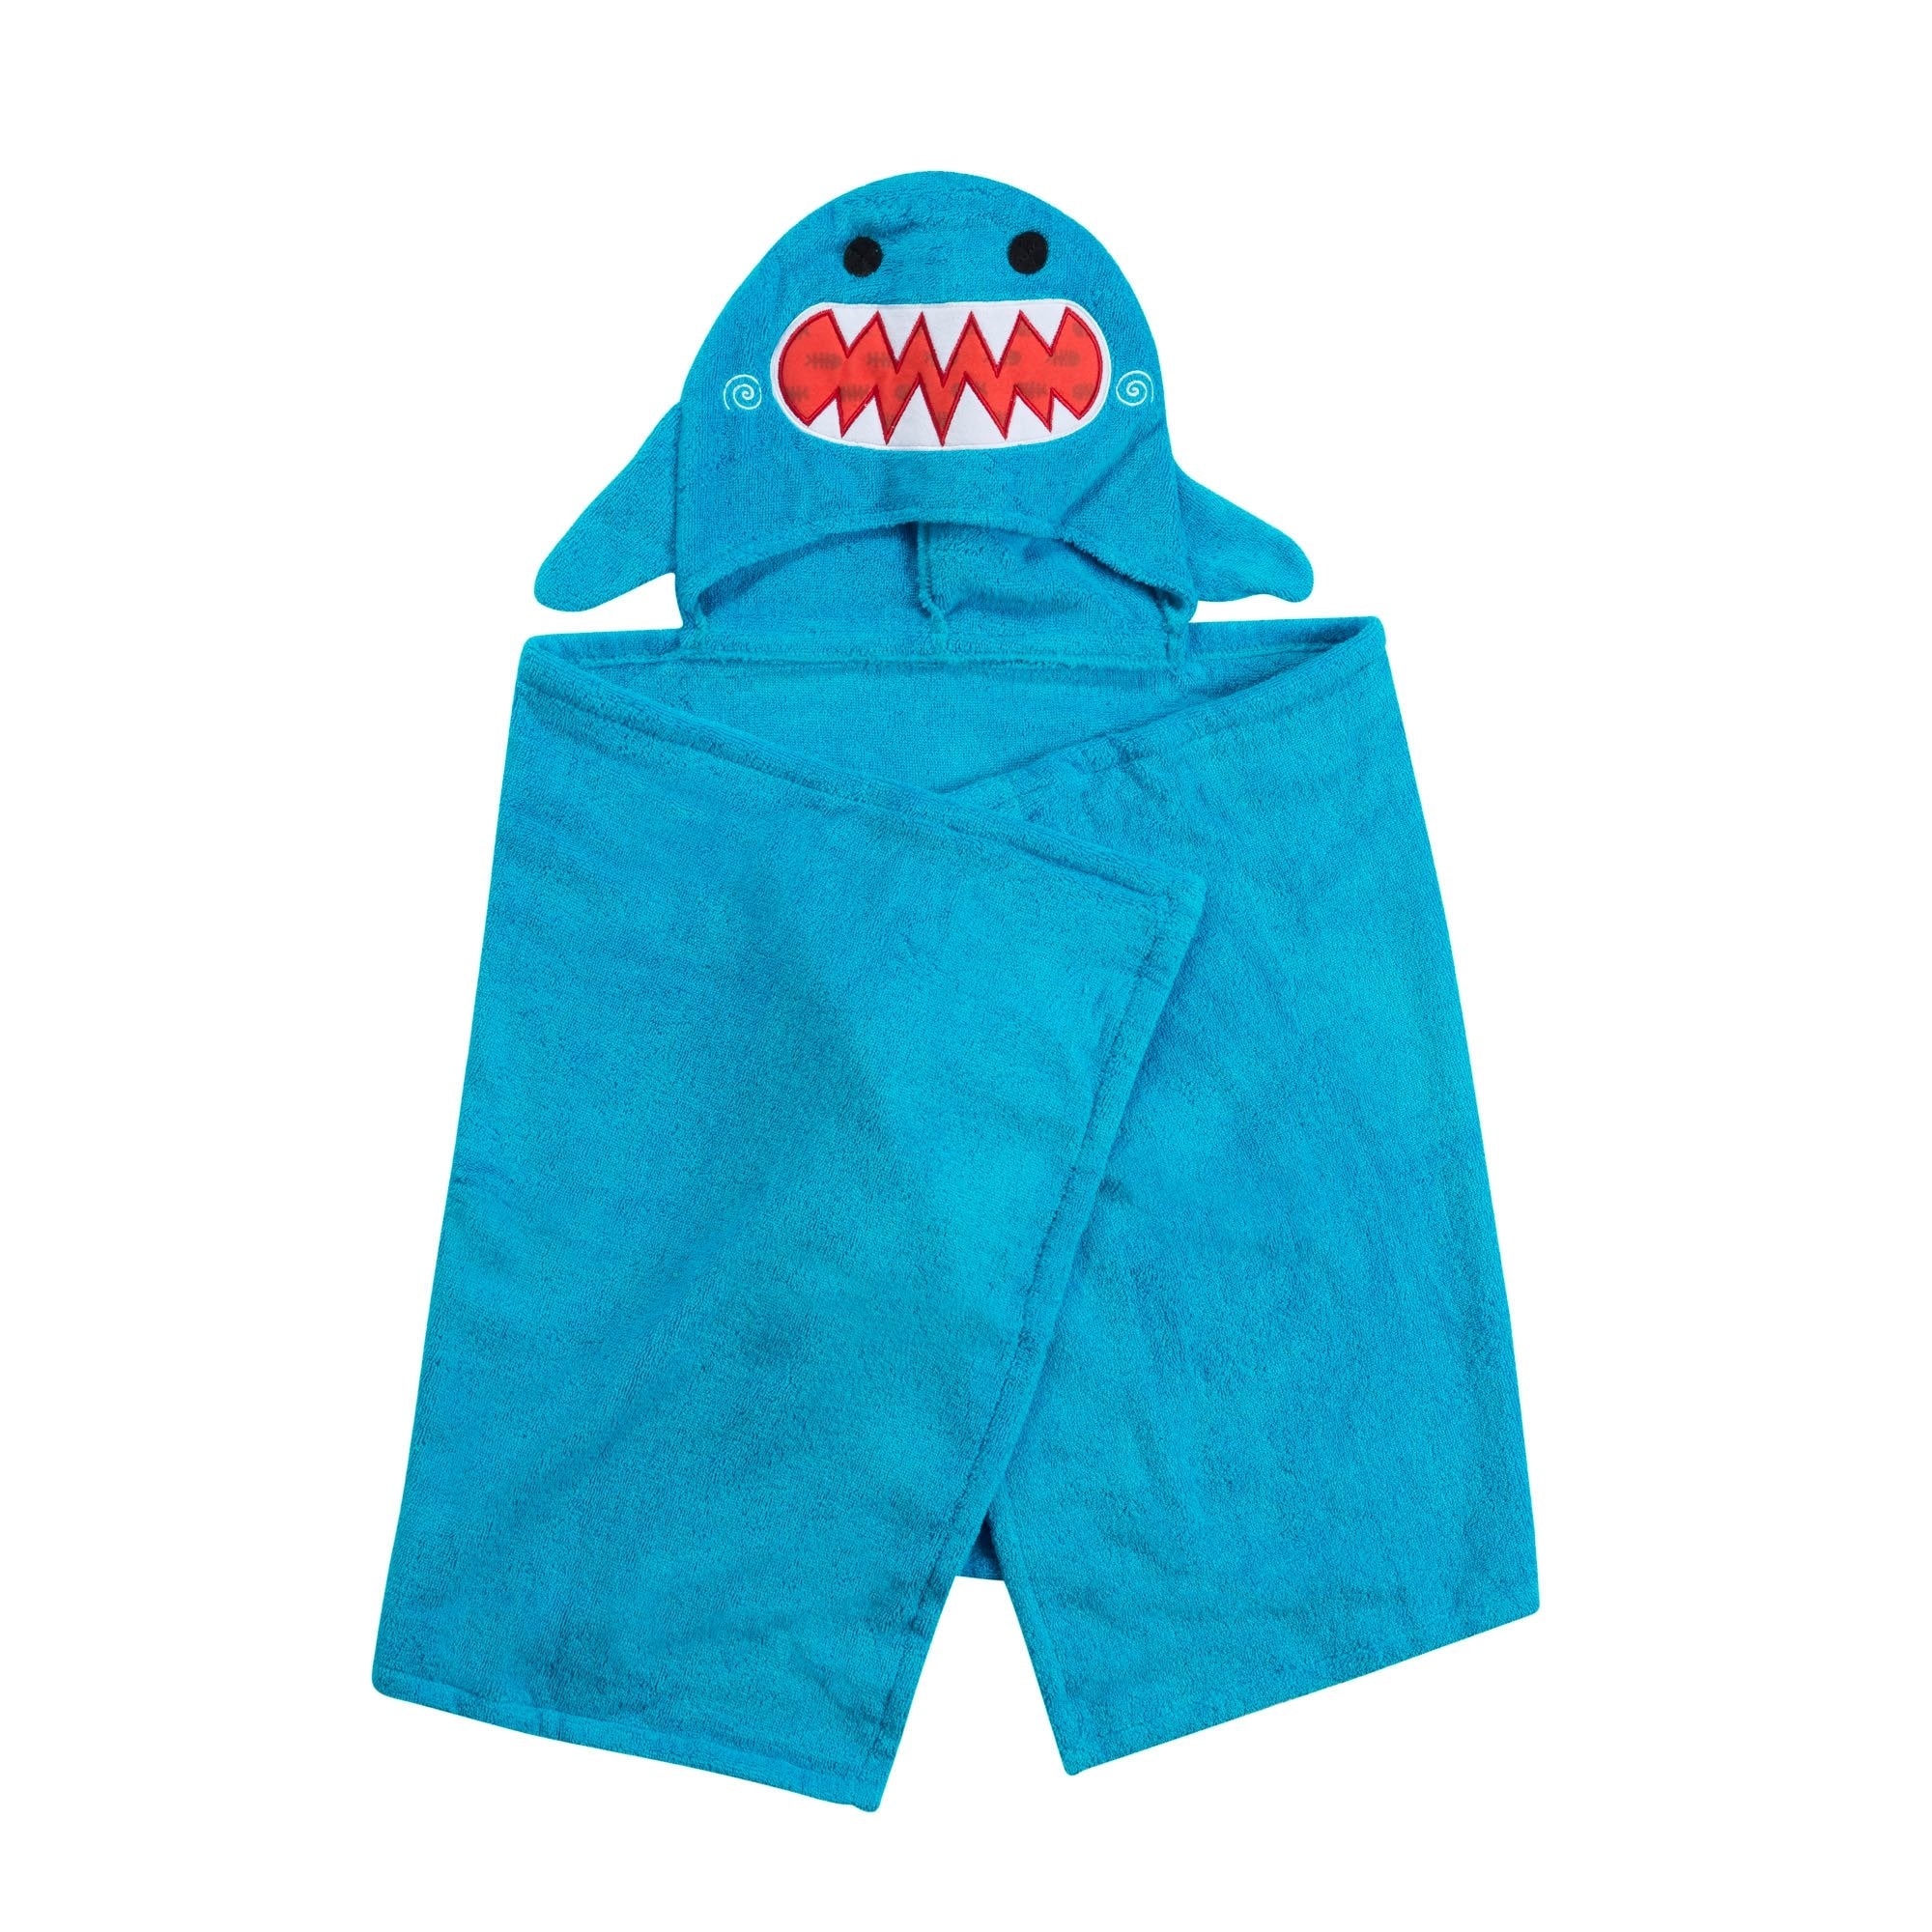 Sherman the Shark Toddler Towel - HoneyBug 